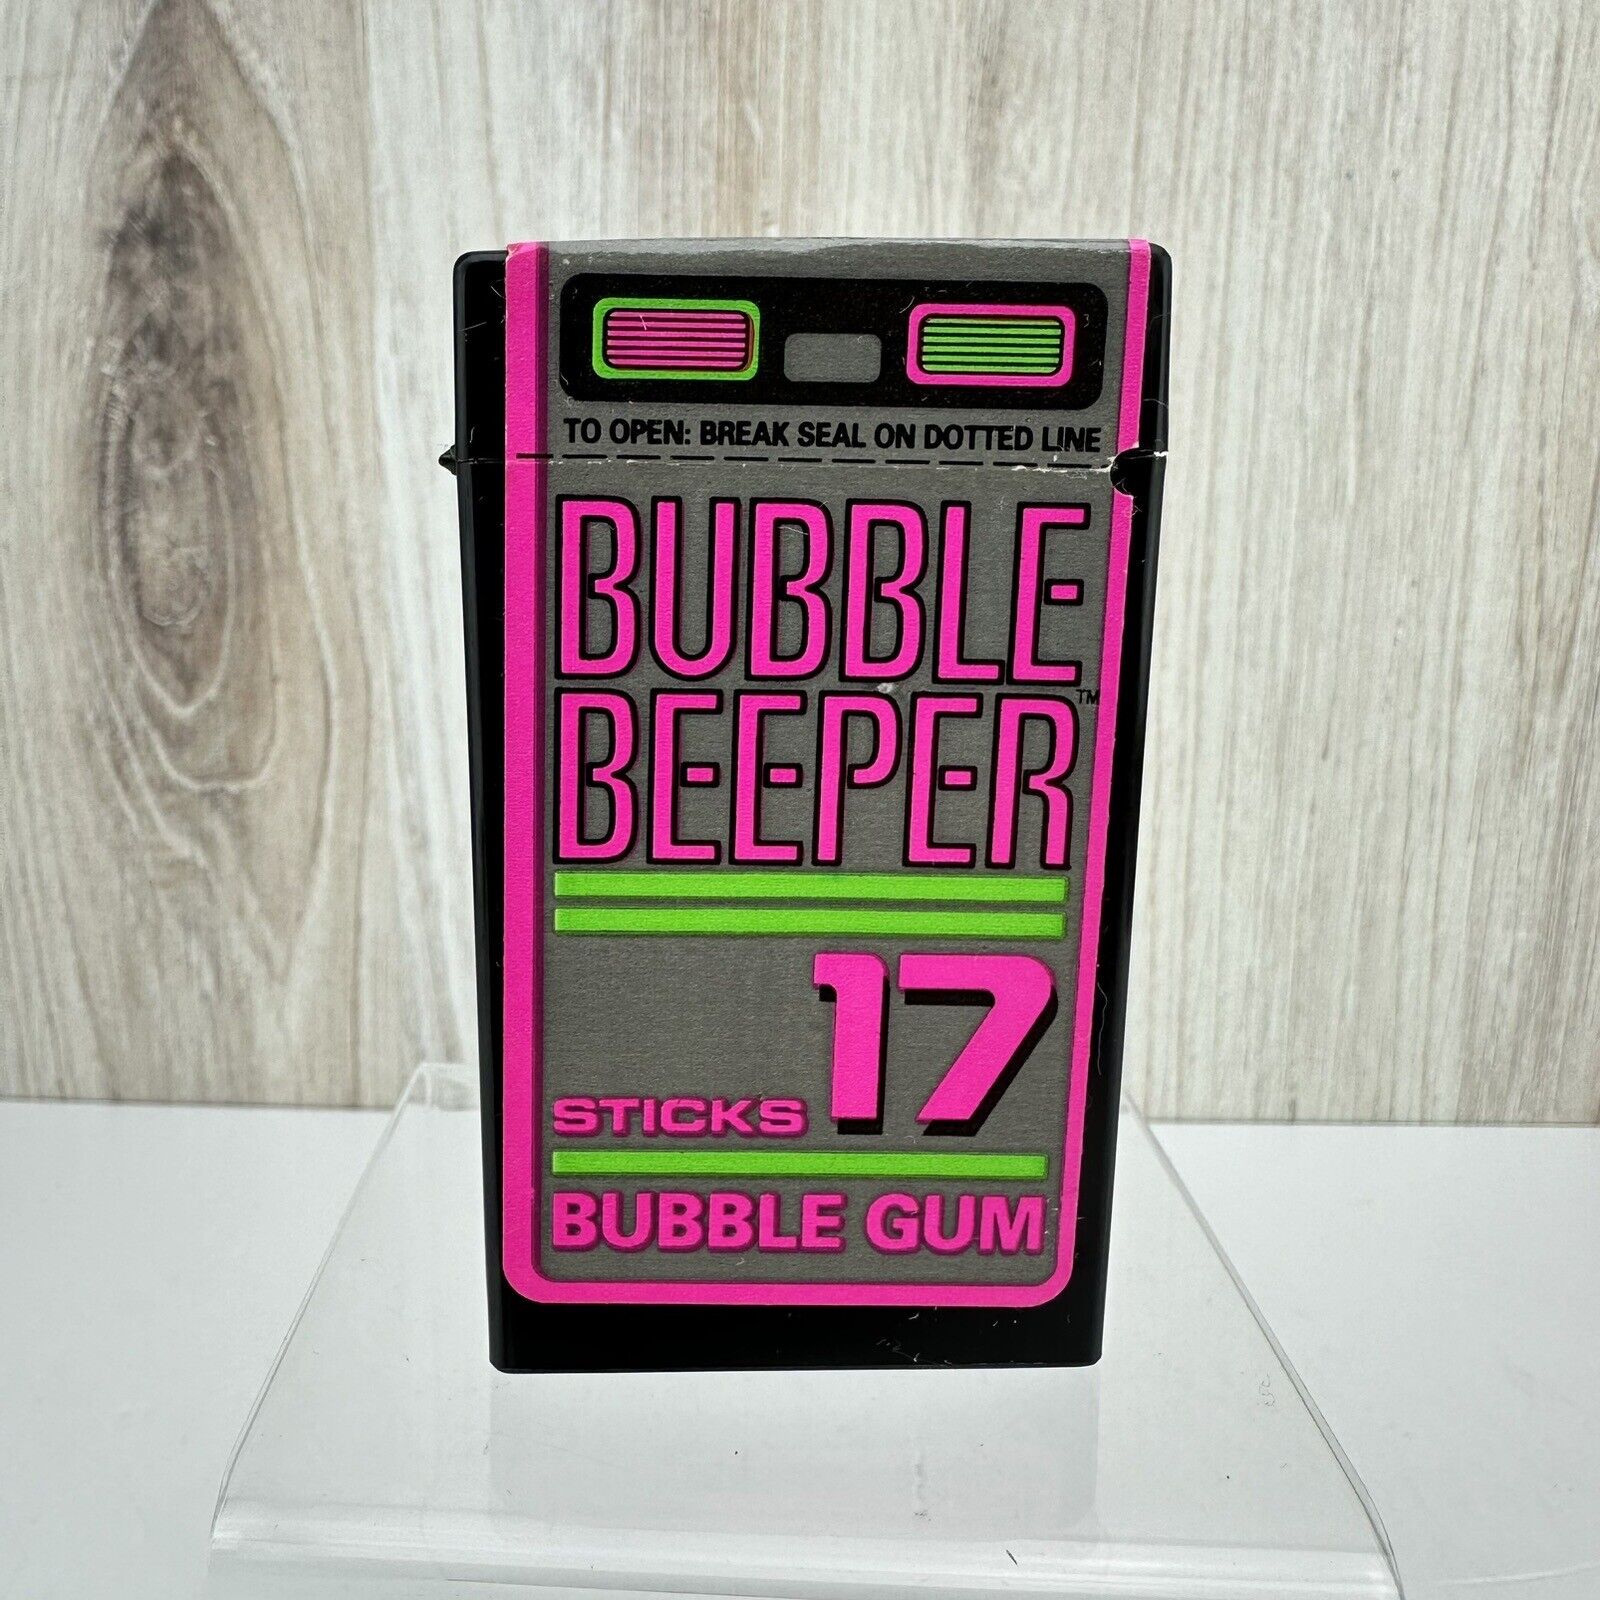 **NEW SEALED** Vintage Bubble Beeper Container Bubble Gum Amurol Confections